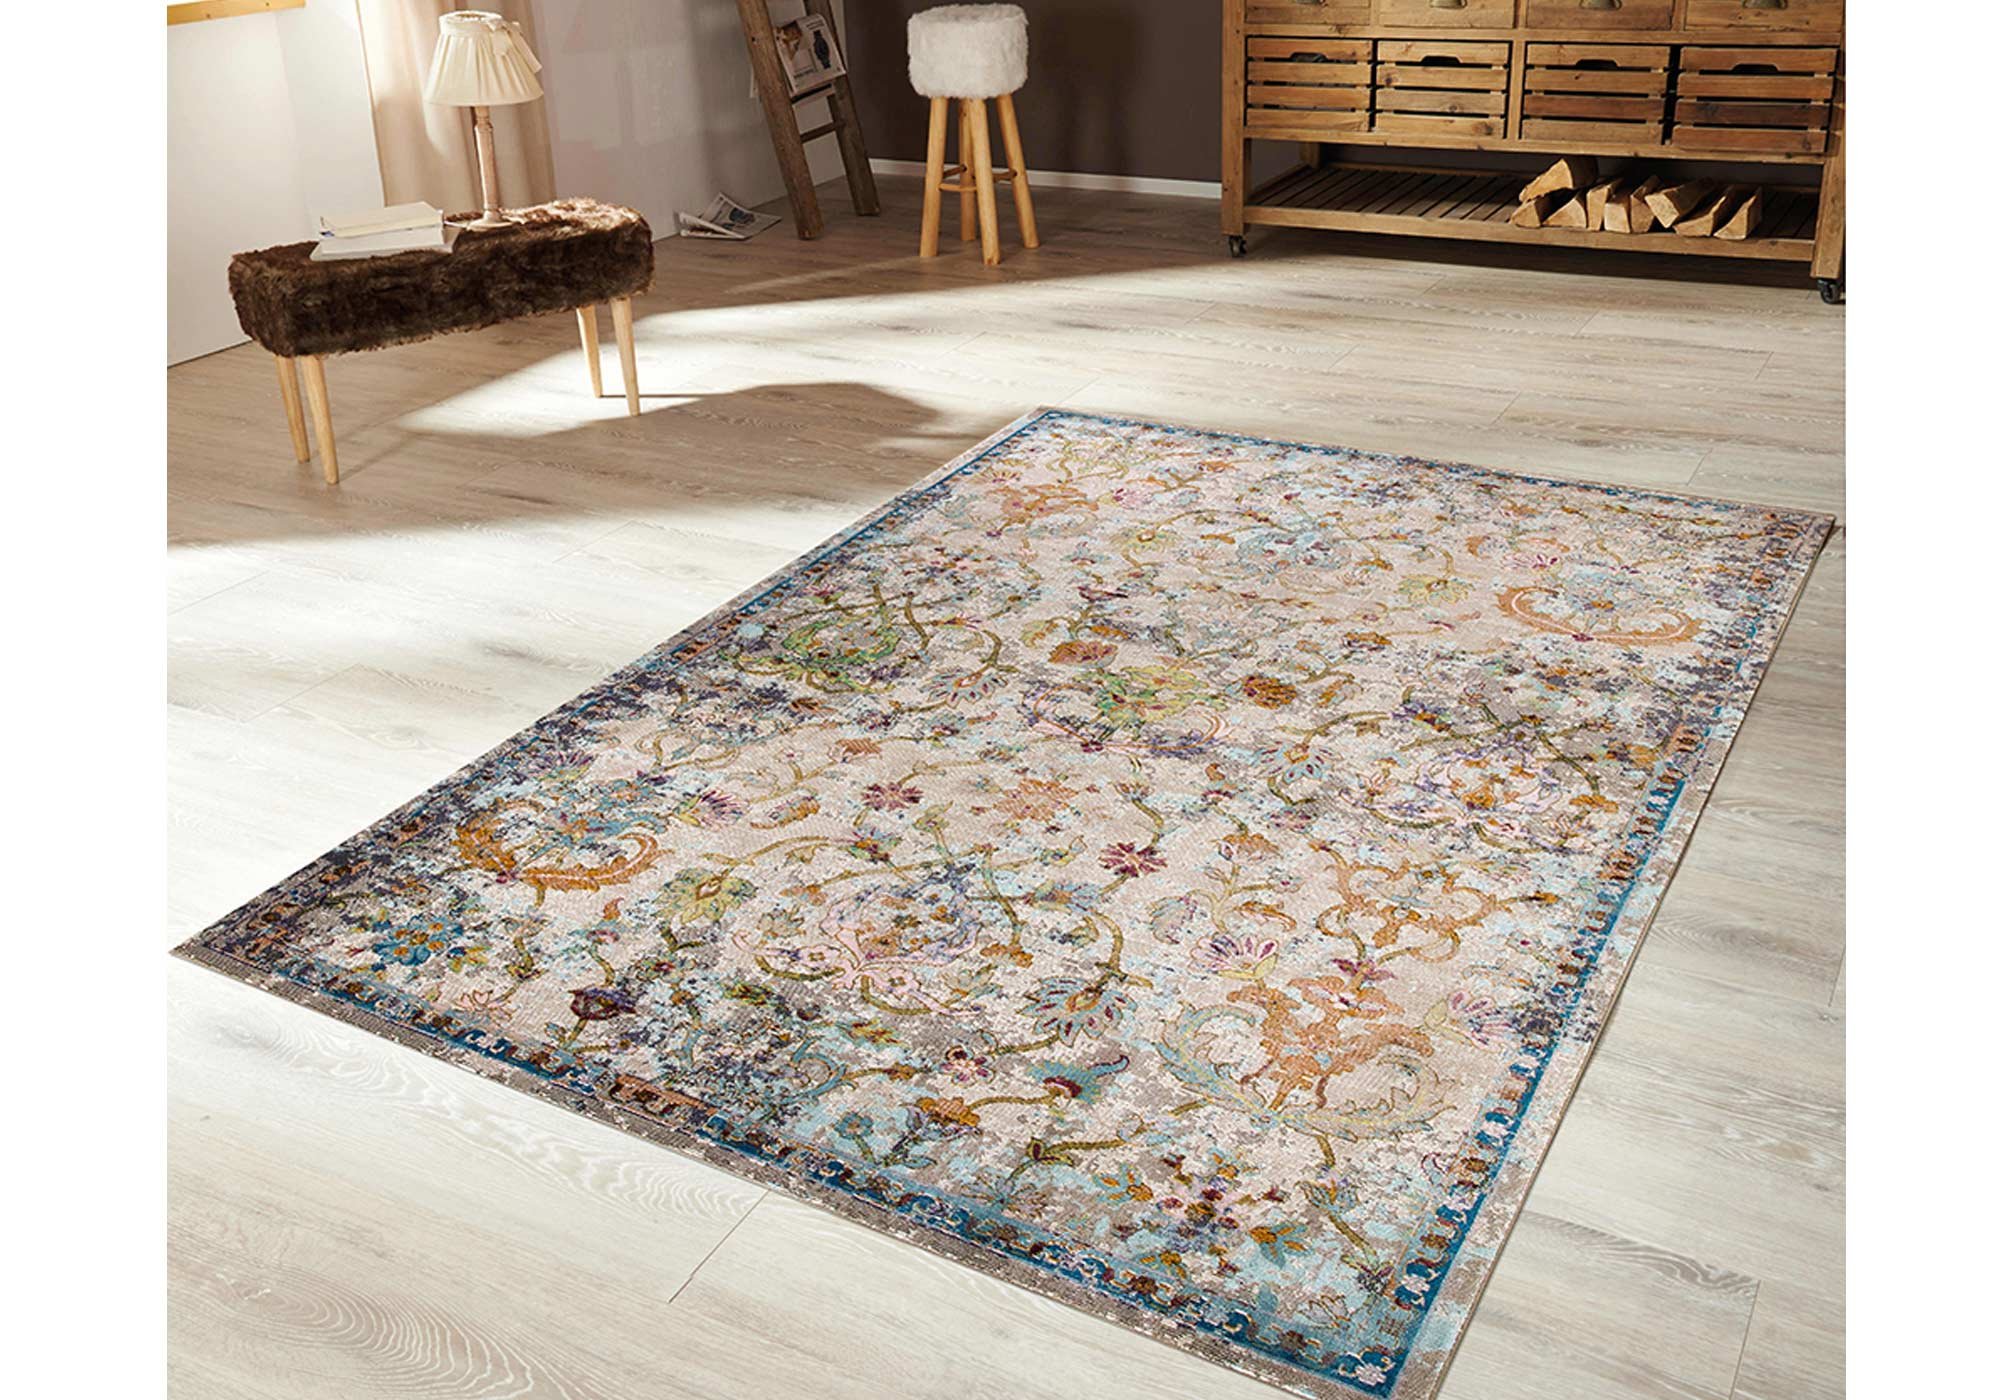 Festival Teppich 160 x 230 cm - mehrfarbig - 6 mm Florhöhe - Picasso 599